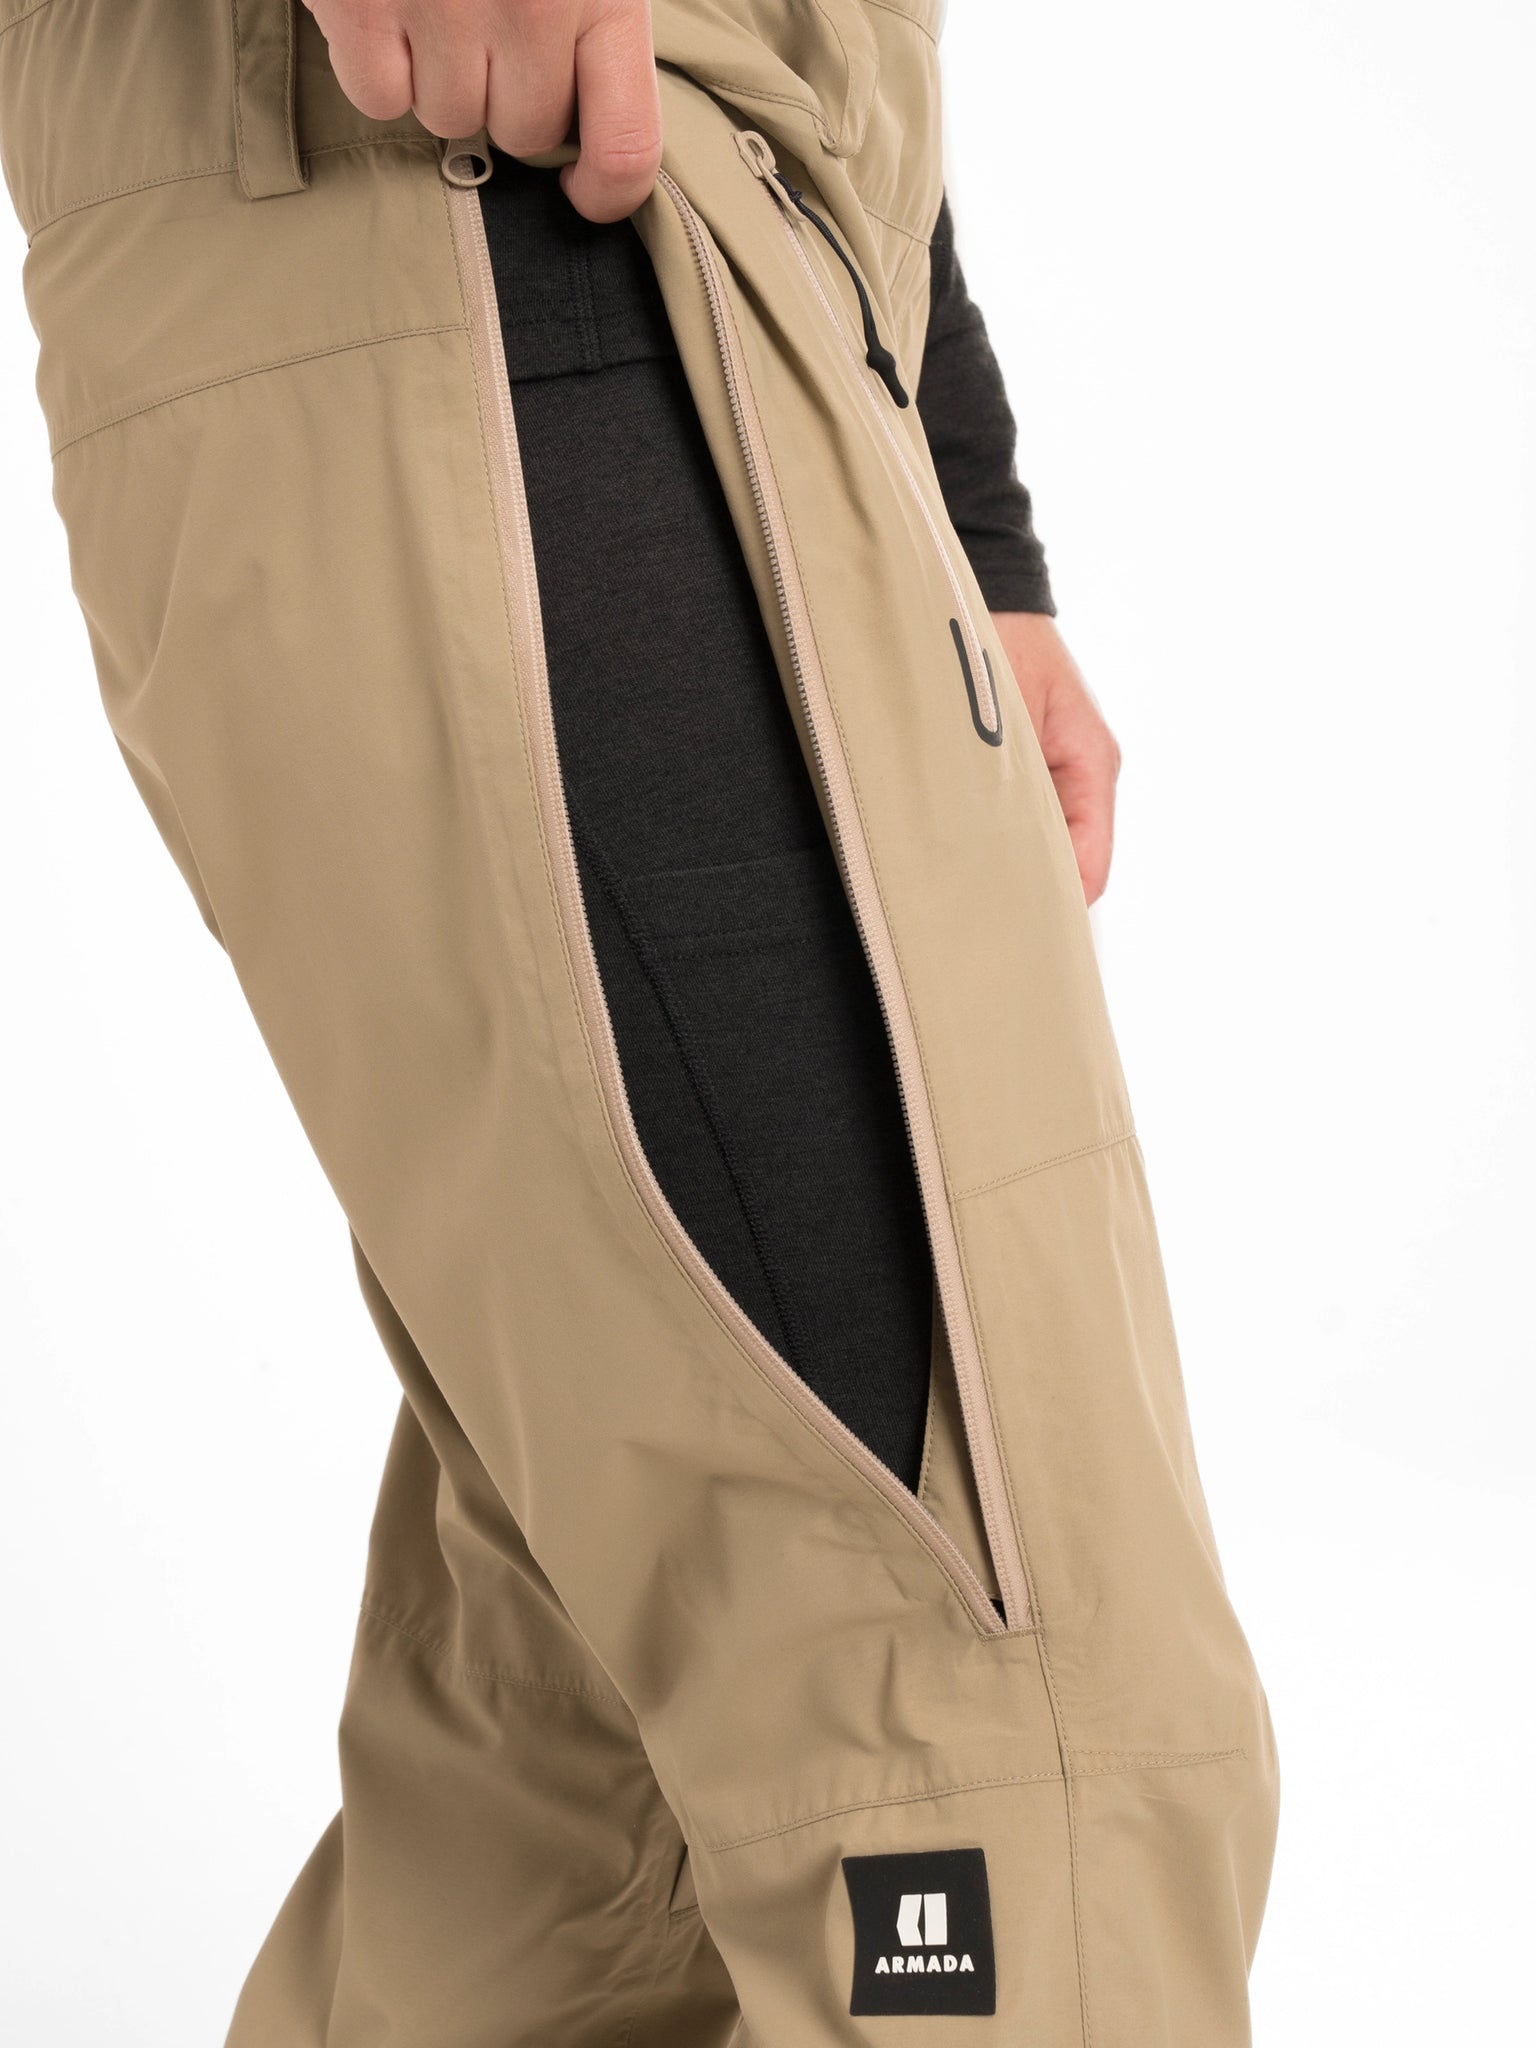 ARMADA PASCORE 2L WOMEN'S BIB khaki side zipper with model